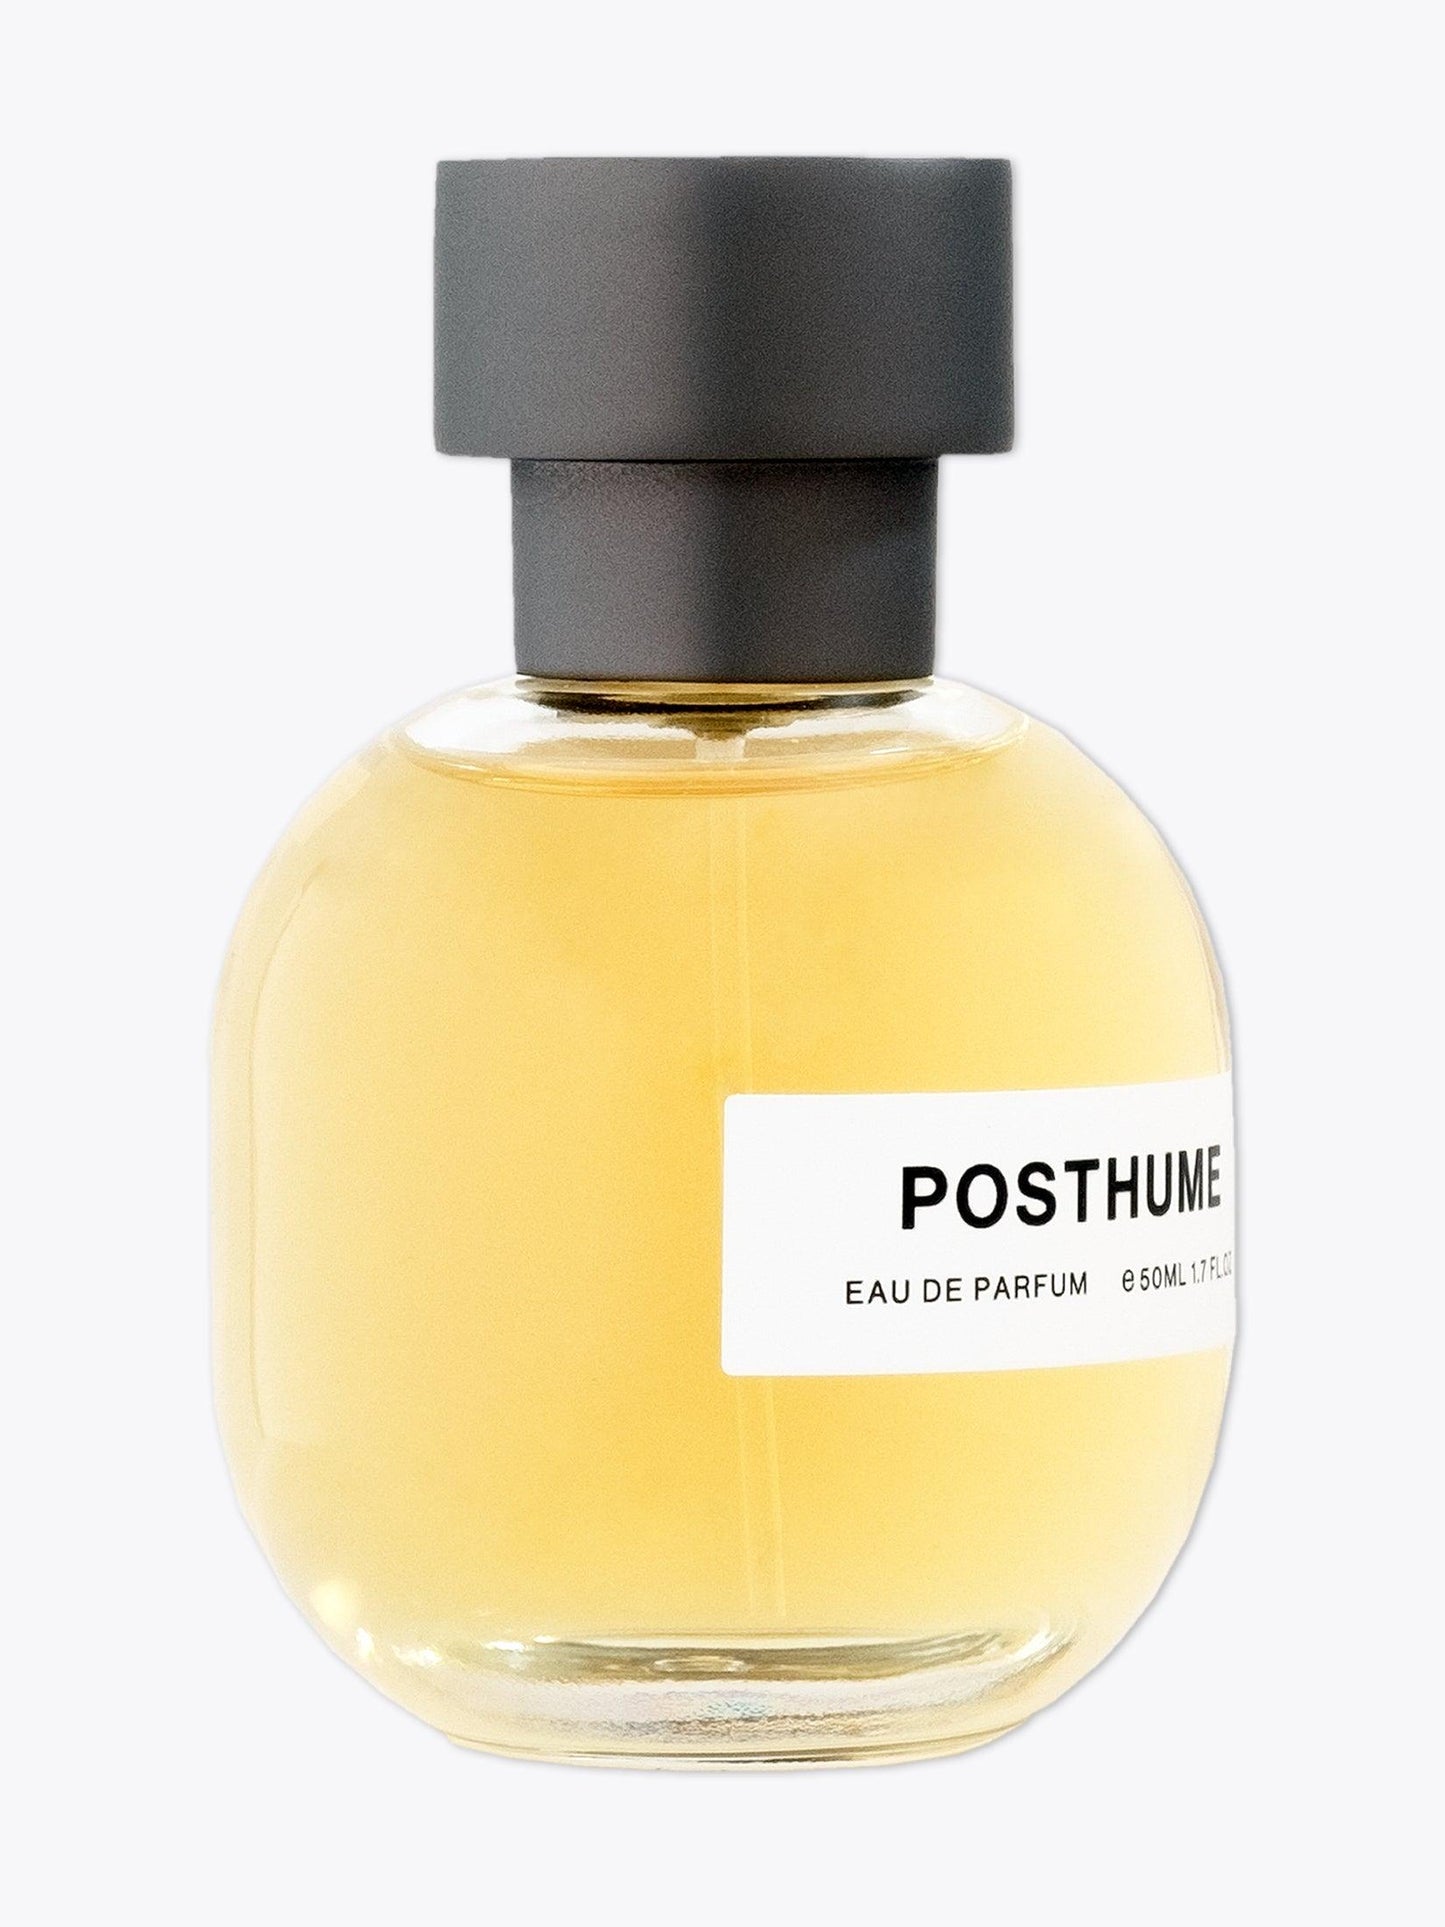 Son Venïn Posthume Eau de Parfum 50 ml - APODEP.com